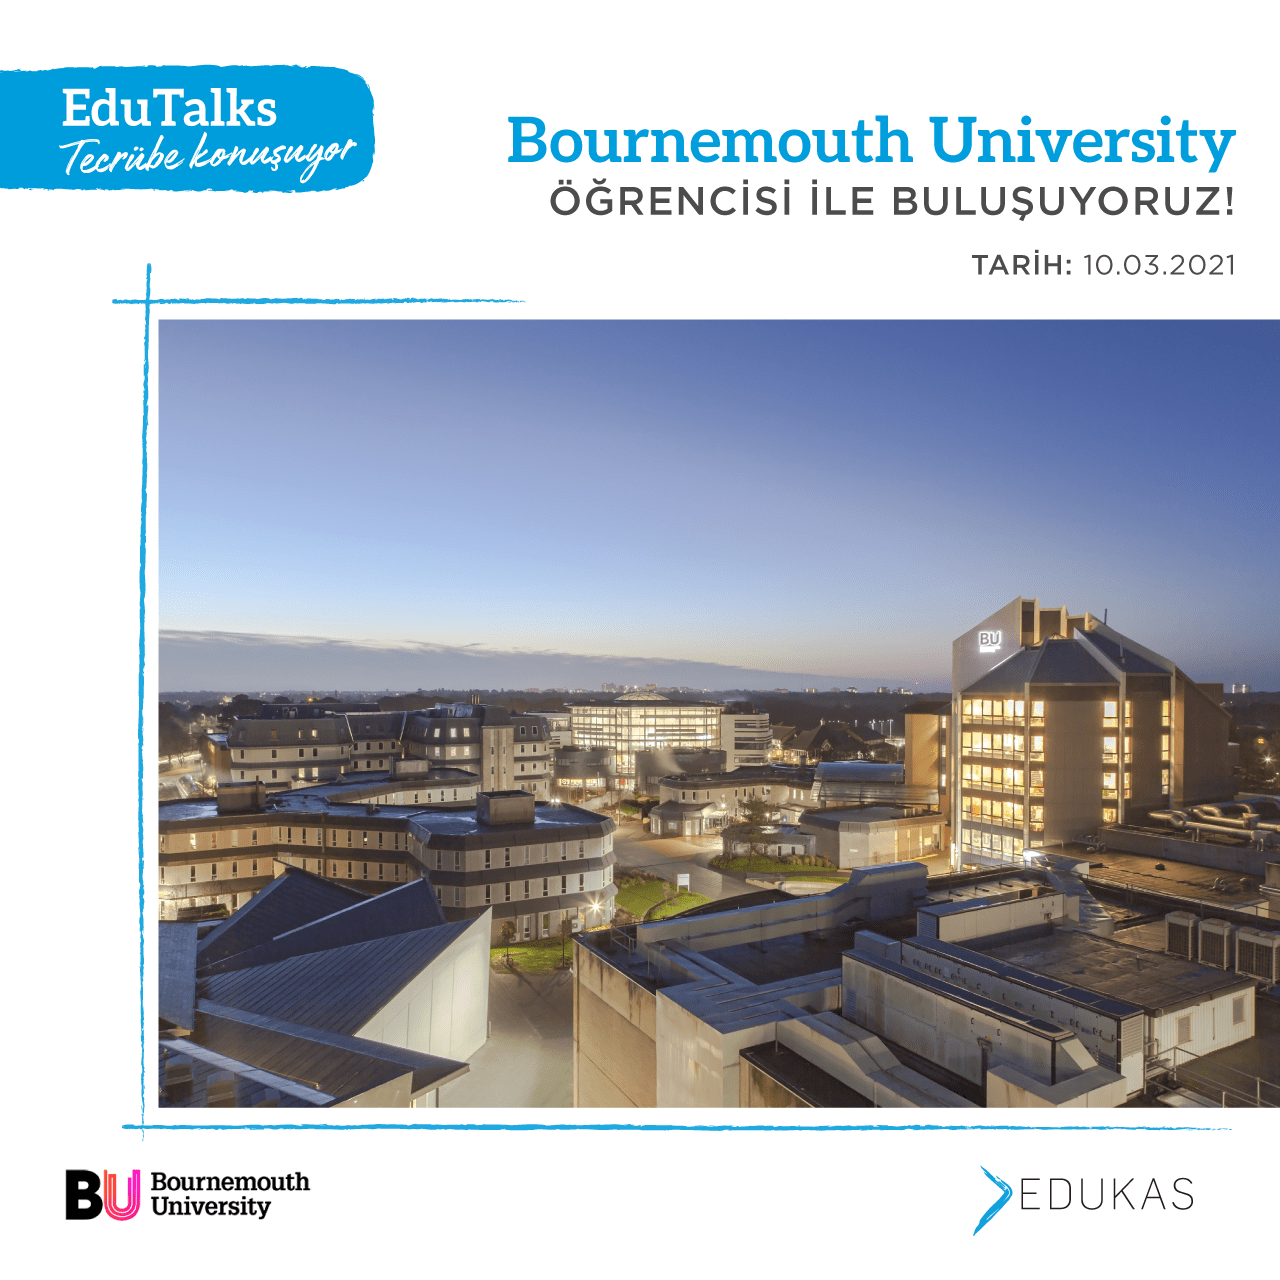 EduTalks - Bournemouth University